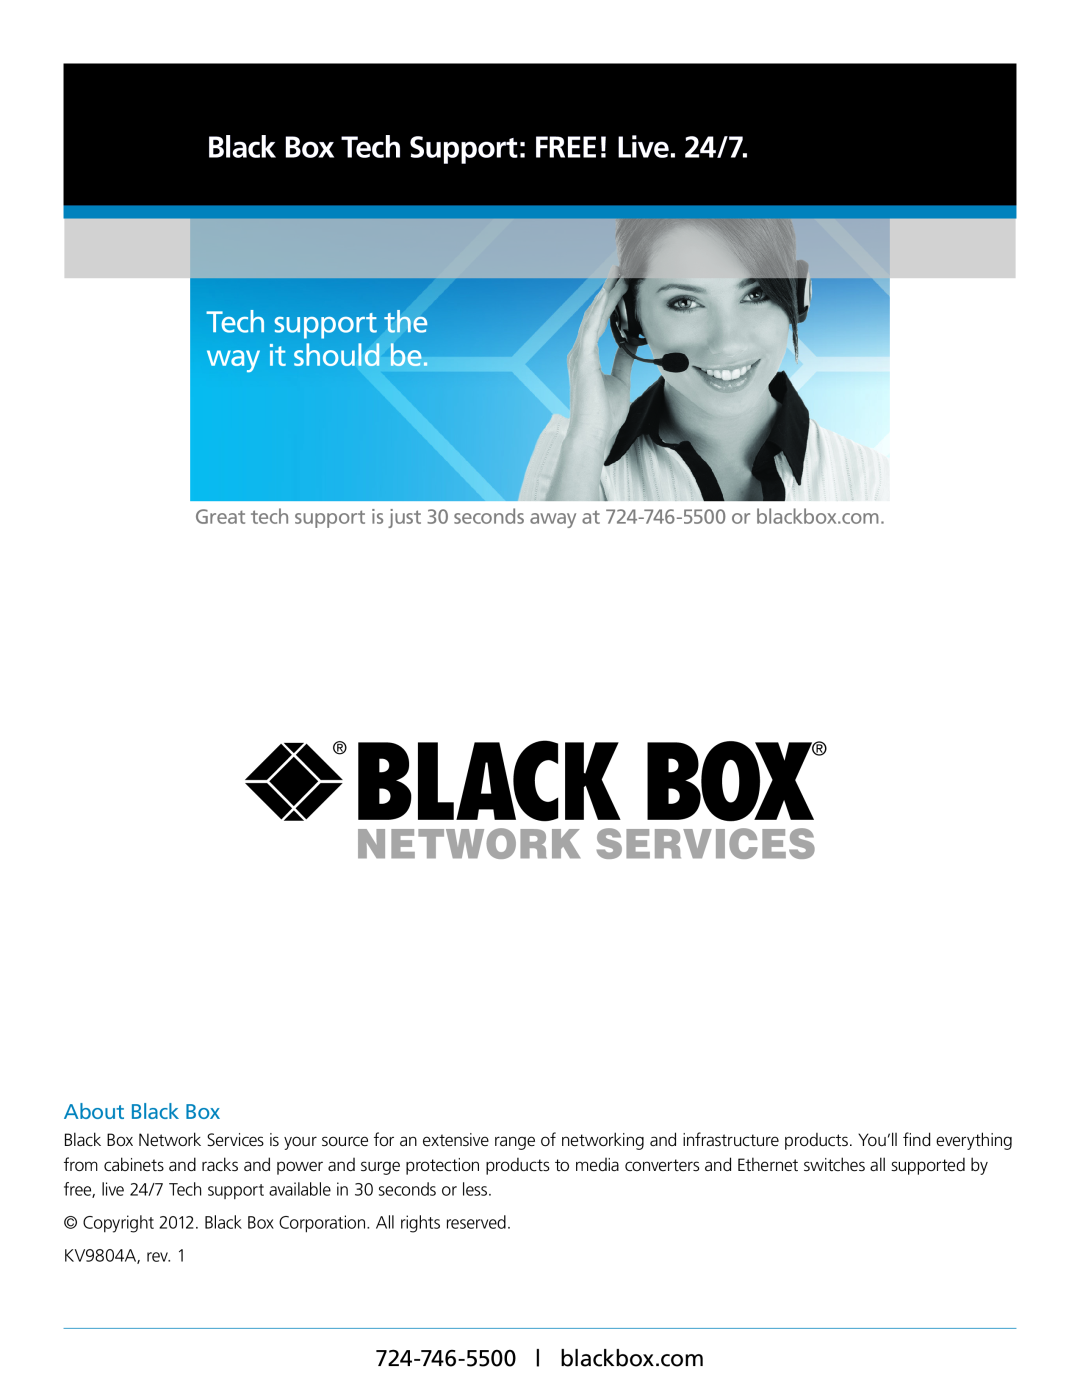 Black Box KV9804A, ServSwitch Wizard DP USB About Black Box, Network Services, Black Box Tech Support FREE! Live. 24/7 